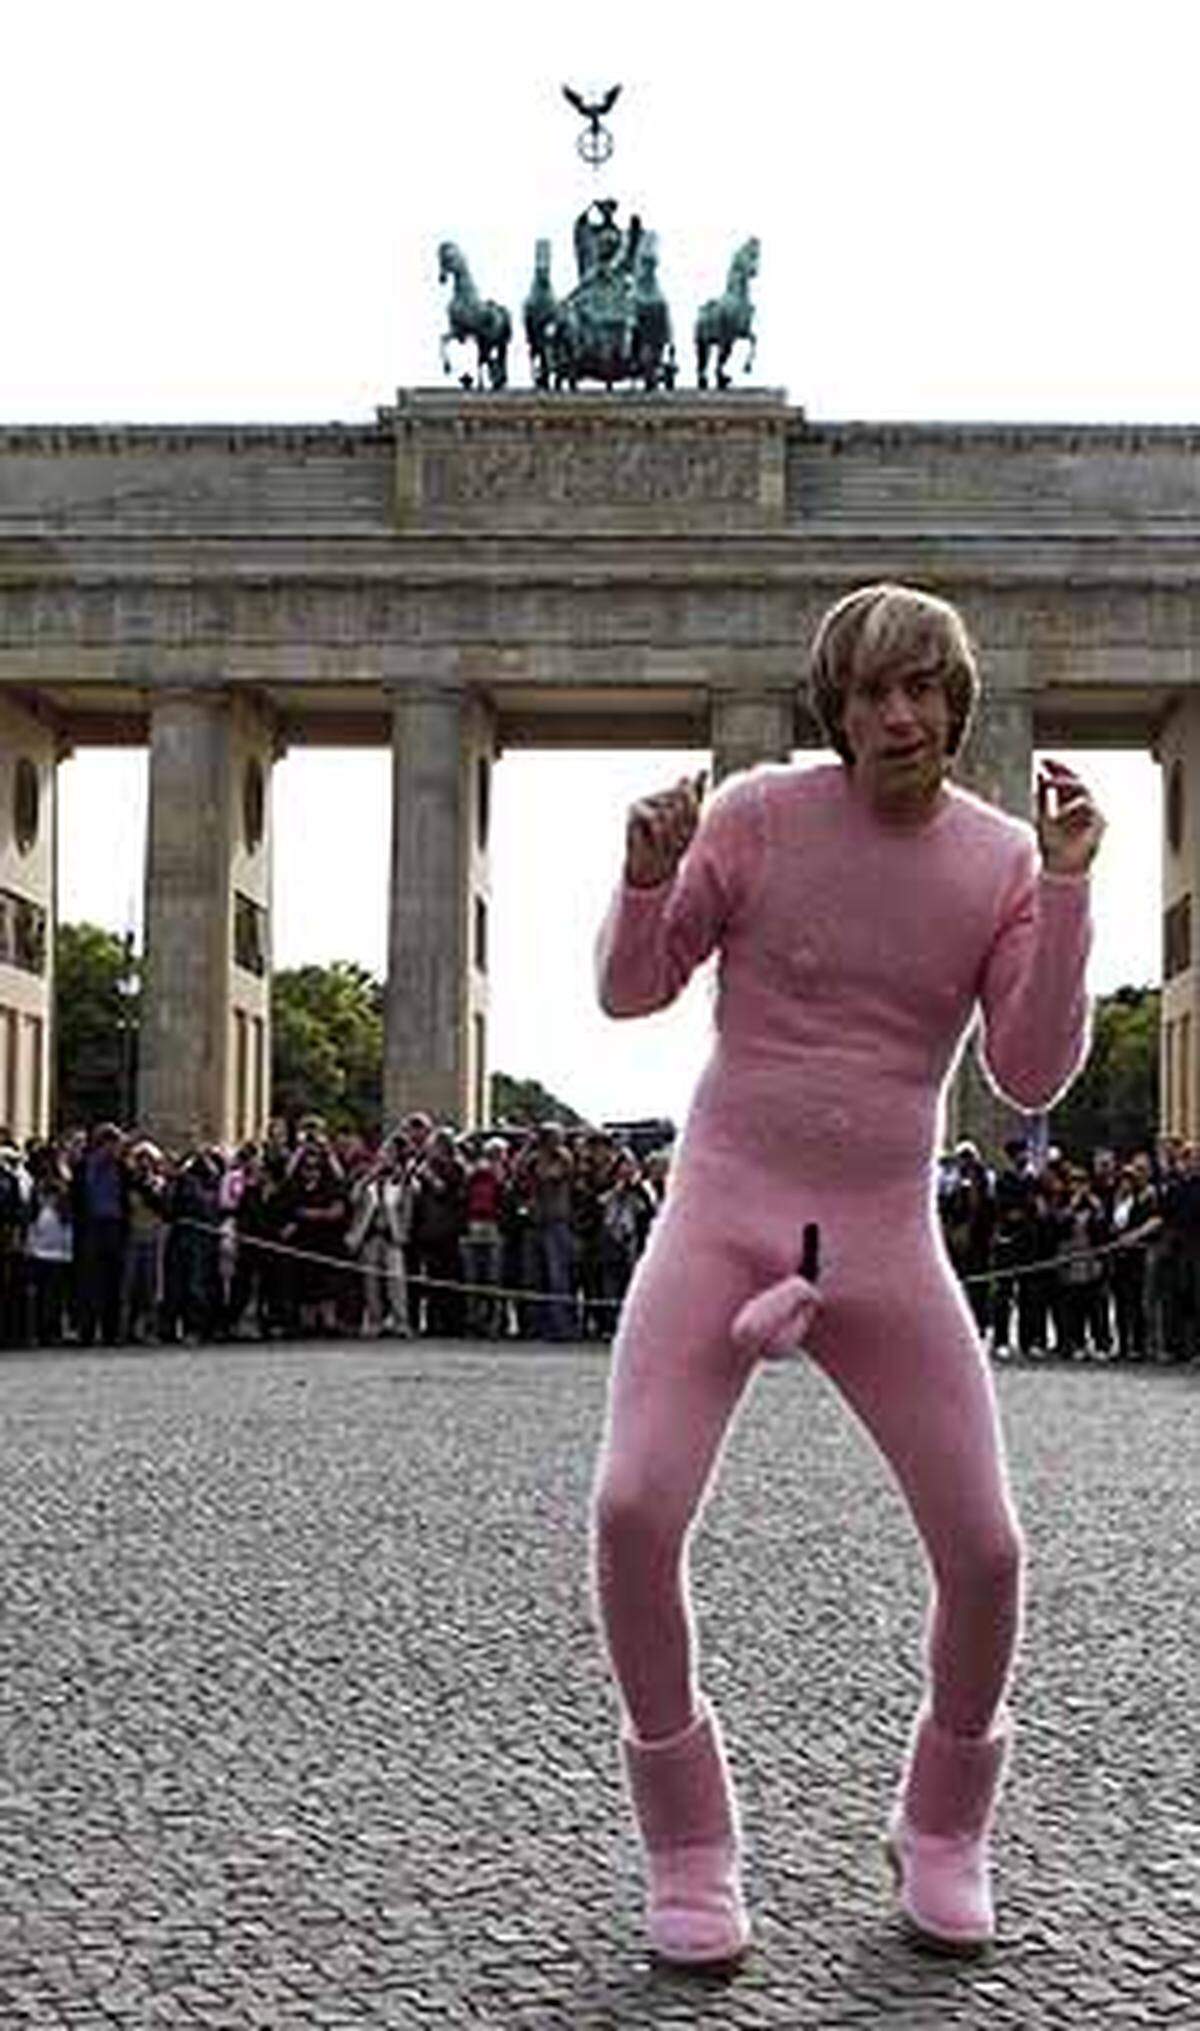 ... vor dem Berliner Brandenburger Tor posiert er als rosa Ferkel.